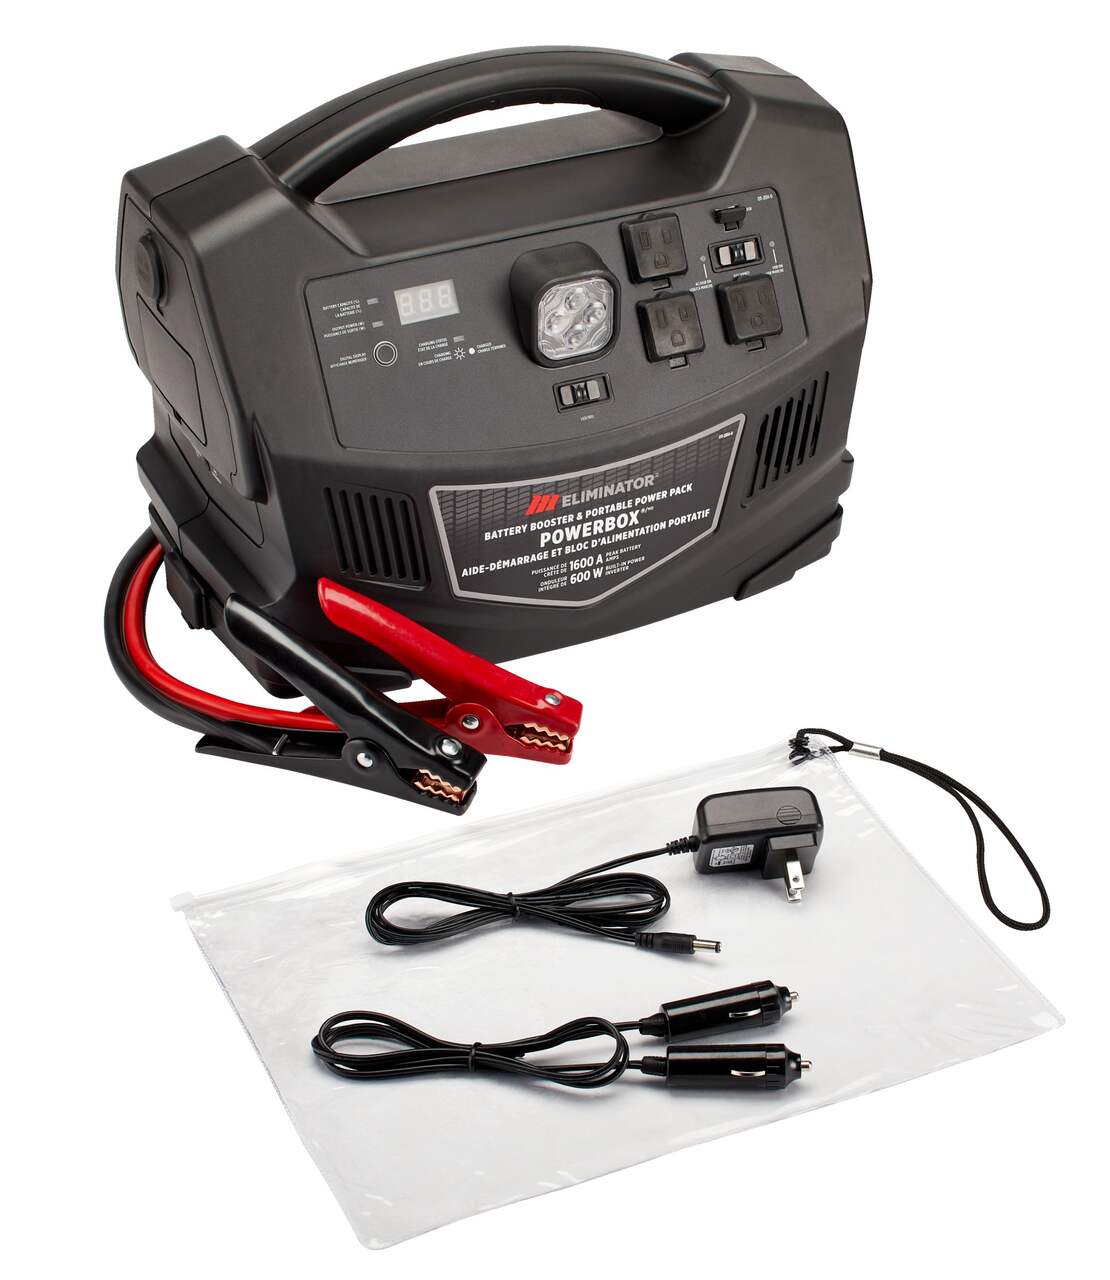 MotoMaster Eliminator PowerBox® Portable Power Pack & Battery